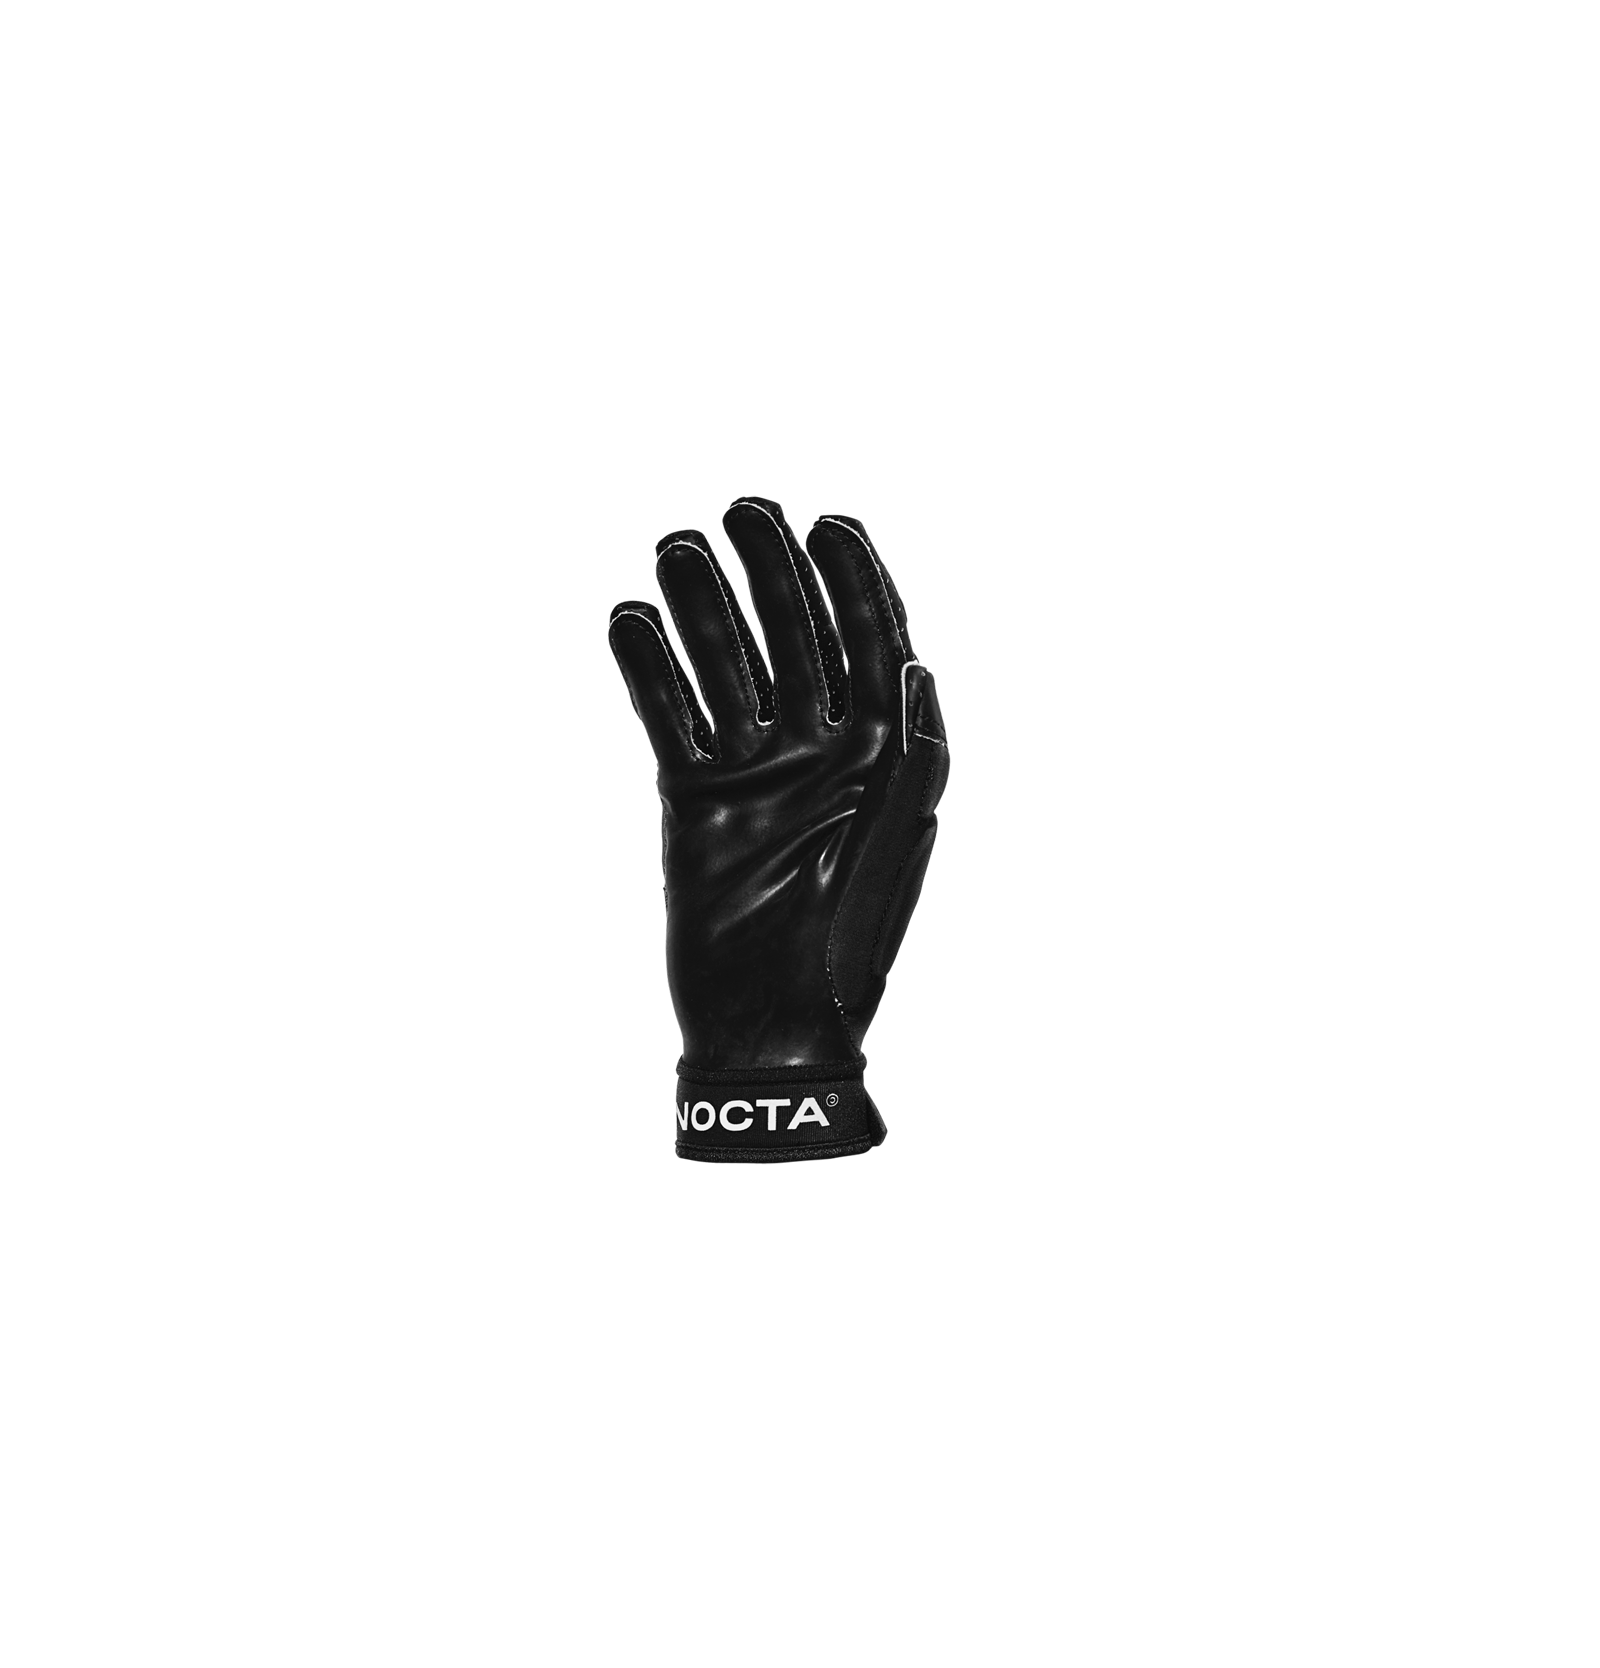 Nike x Drake NOCTA Gloves Black - FW20 - GB